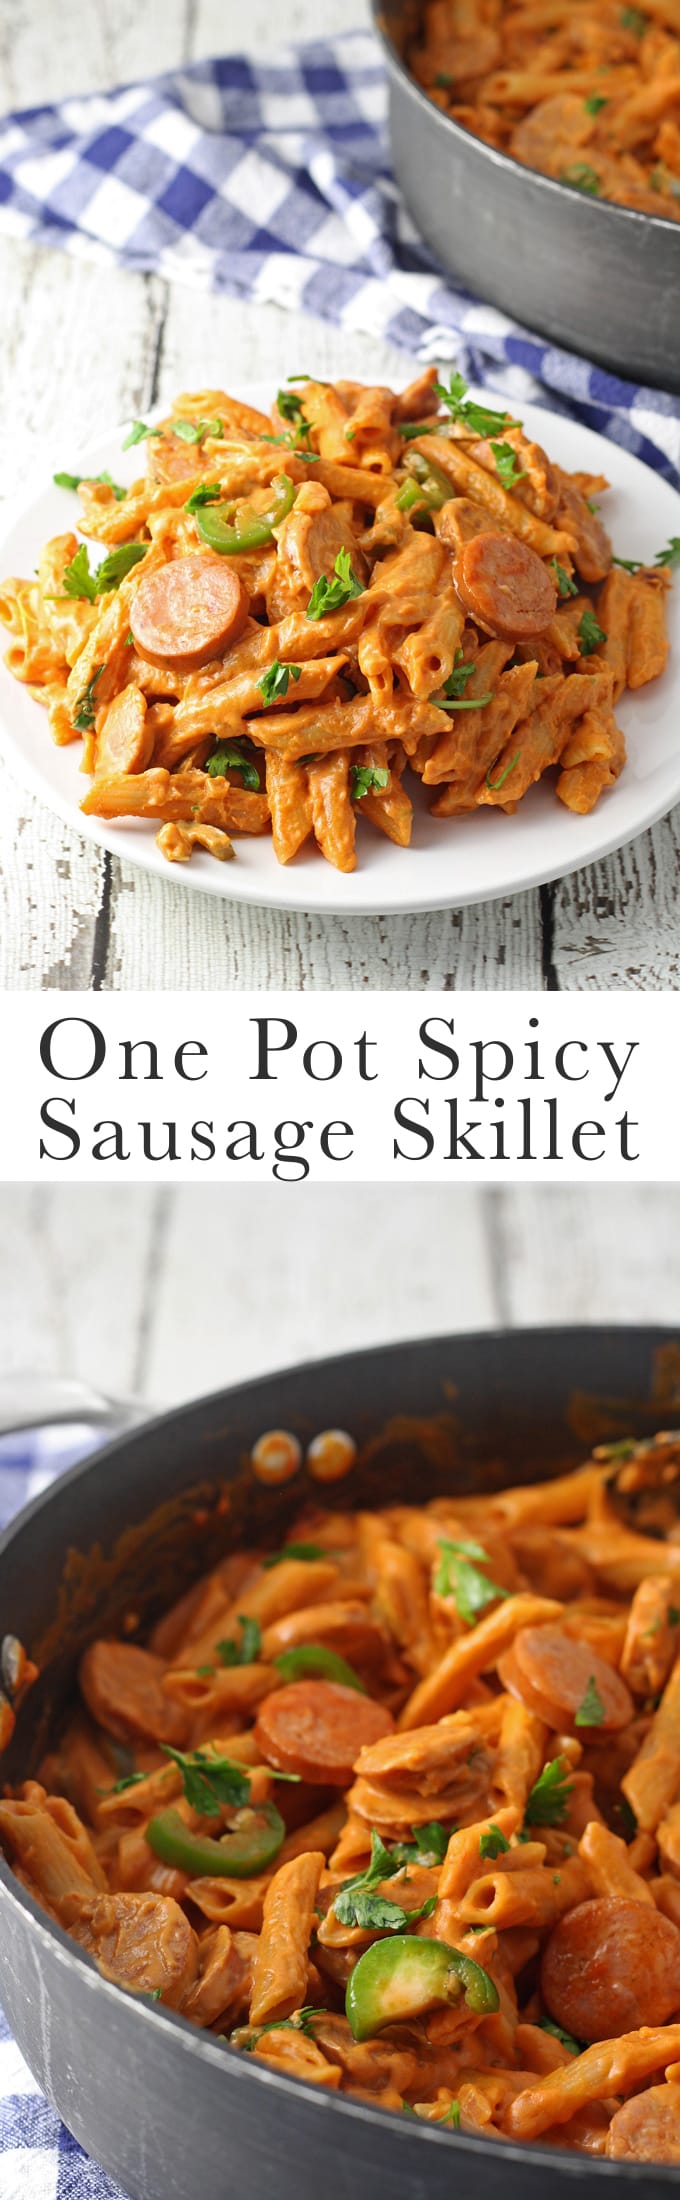 One Pot Spicy Sausage Skillet #dinner #pasta honeyandbirch.com